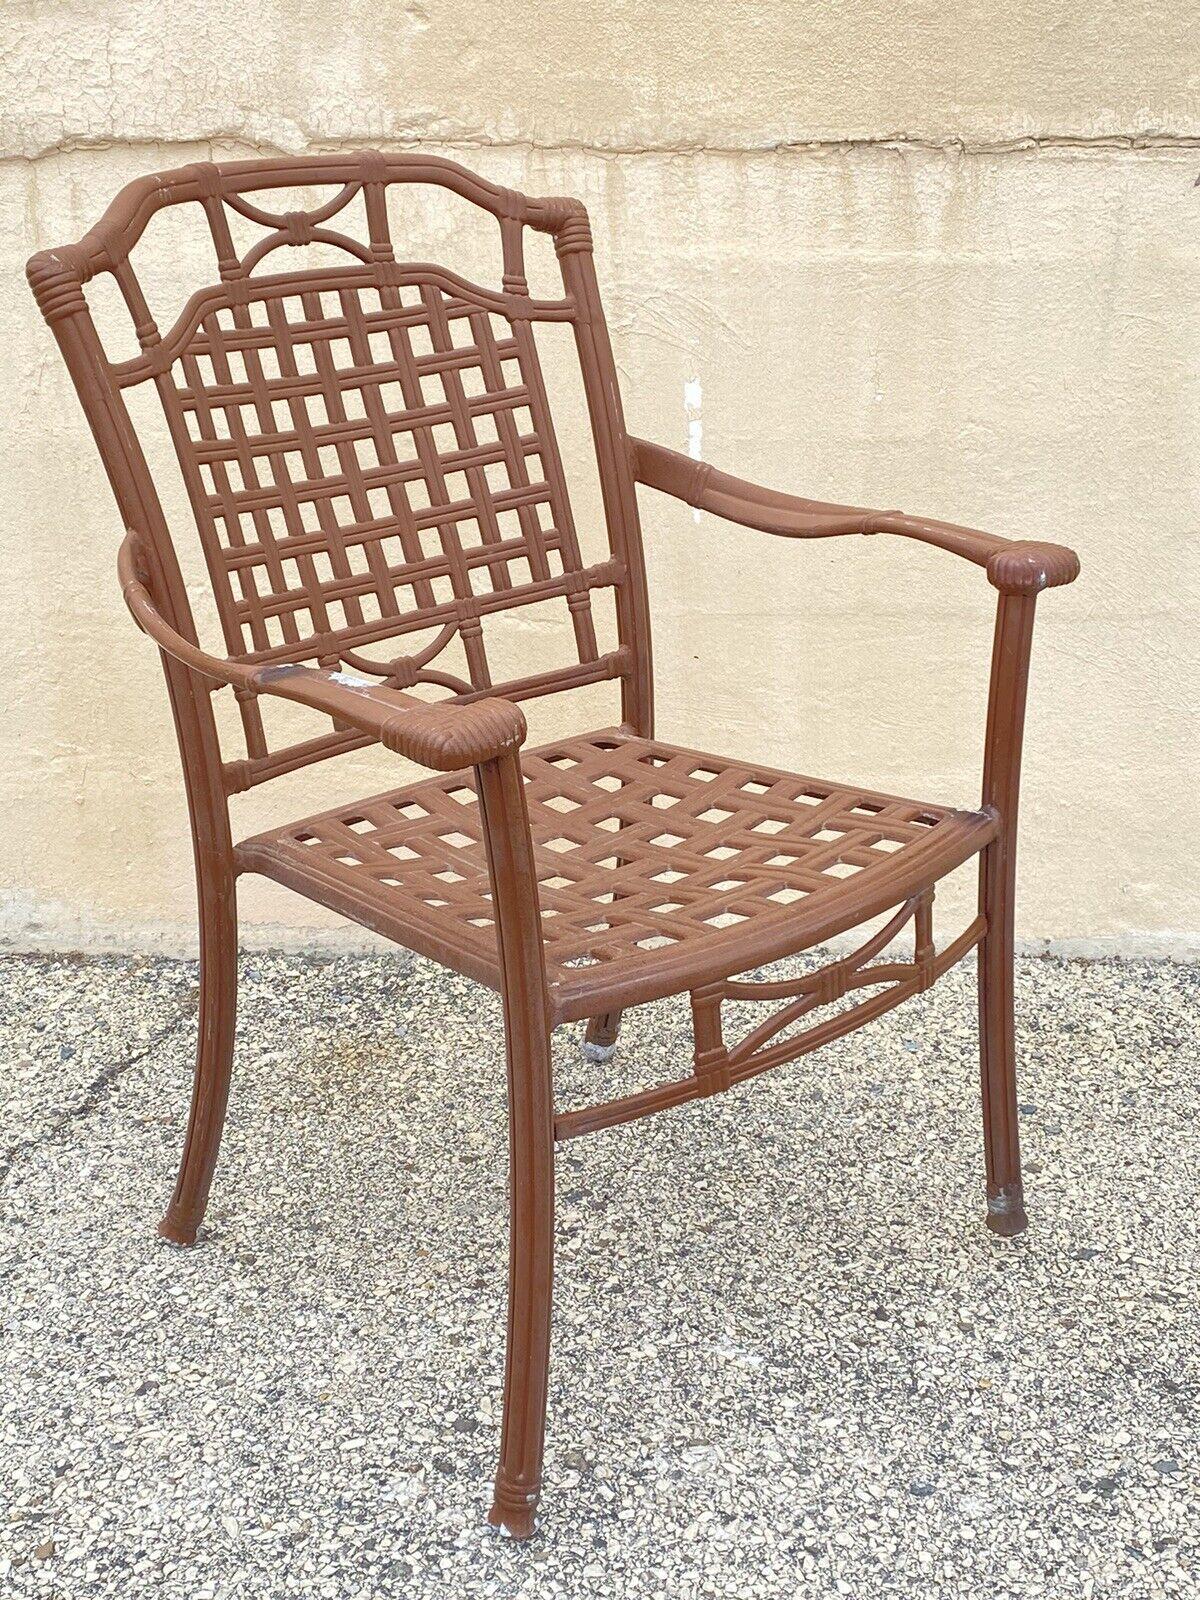 Cast Aluminum Basket Weave Lattice Rattan Patio Outdoor Pool Arm Chair. Circa Late 20th - 21st Century. Measurements: 
36.5